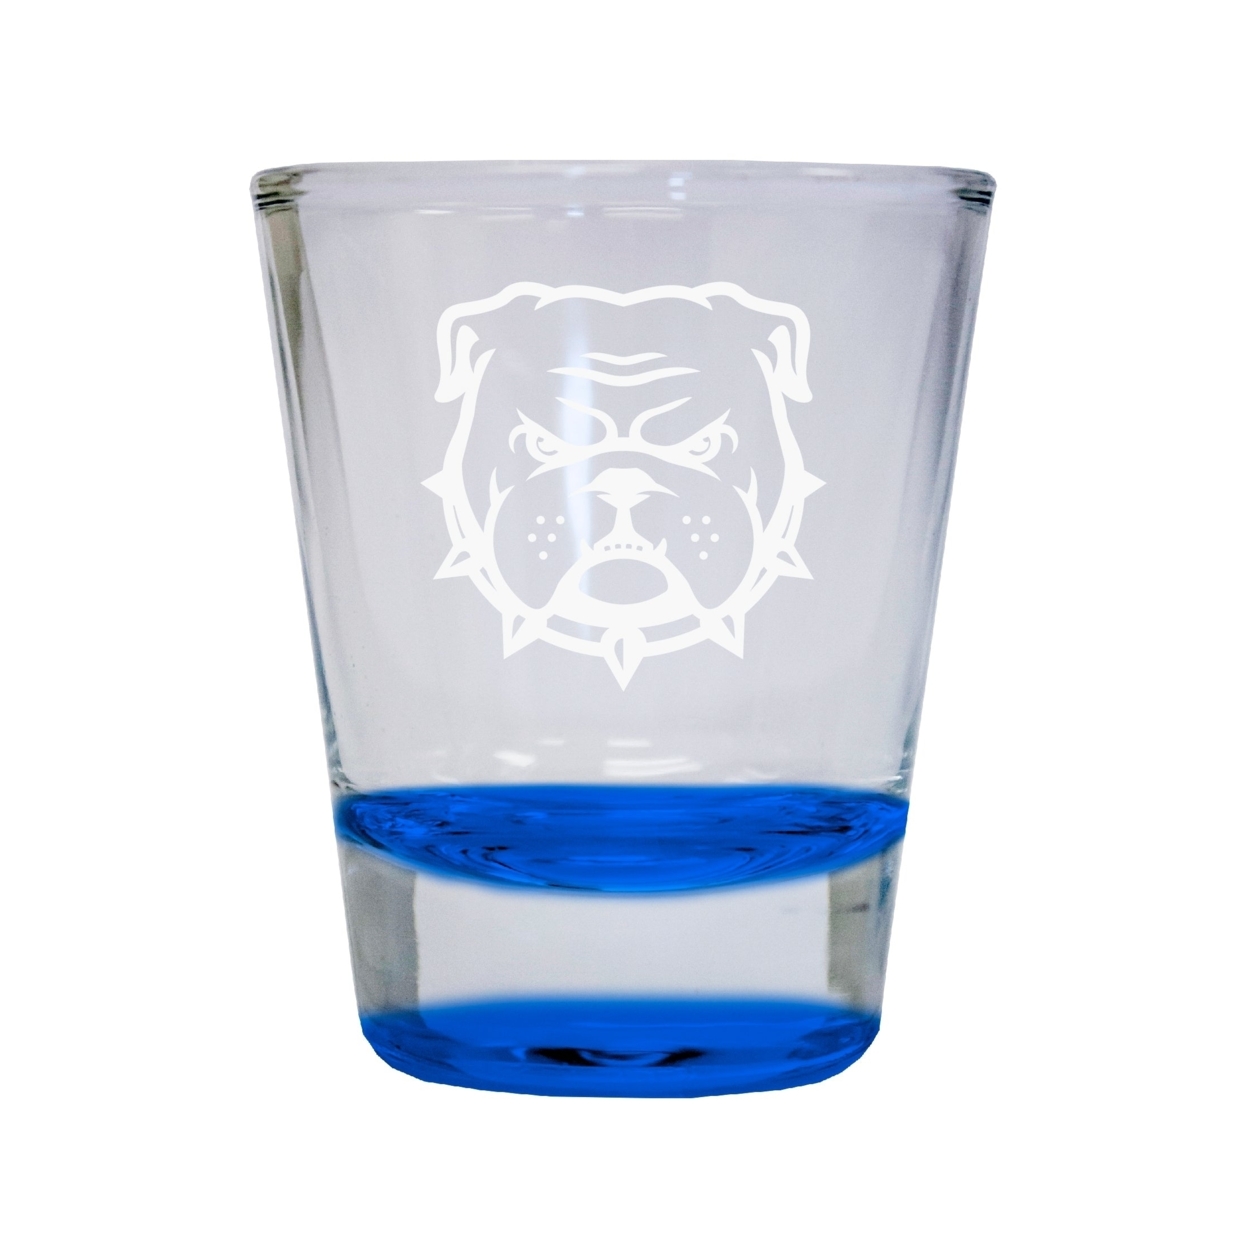 Truman State University Etched Round Shot Glass 2 Oz Blue